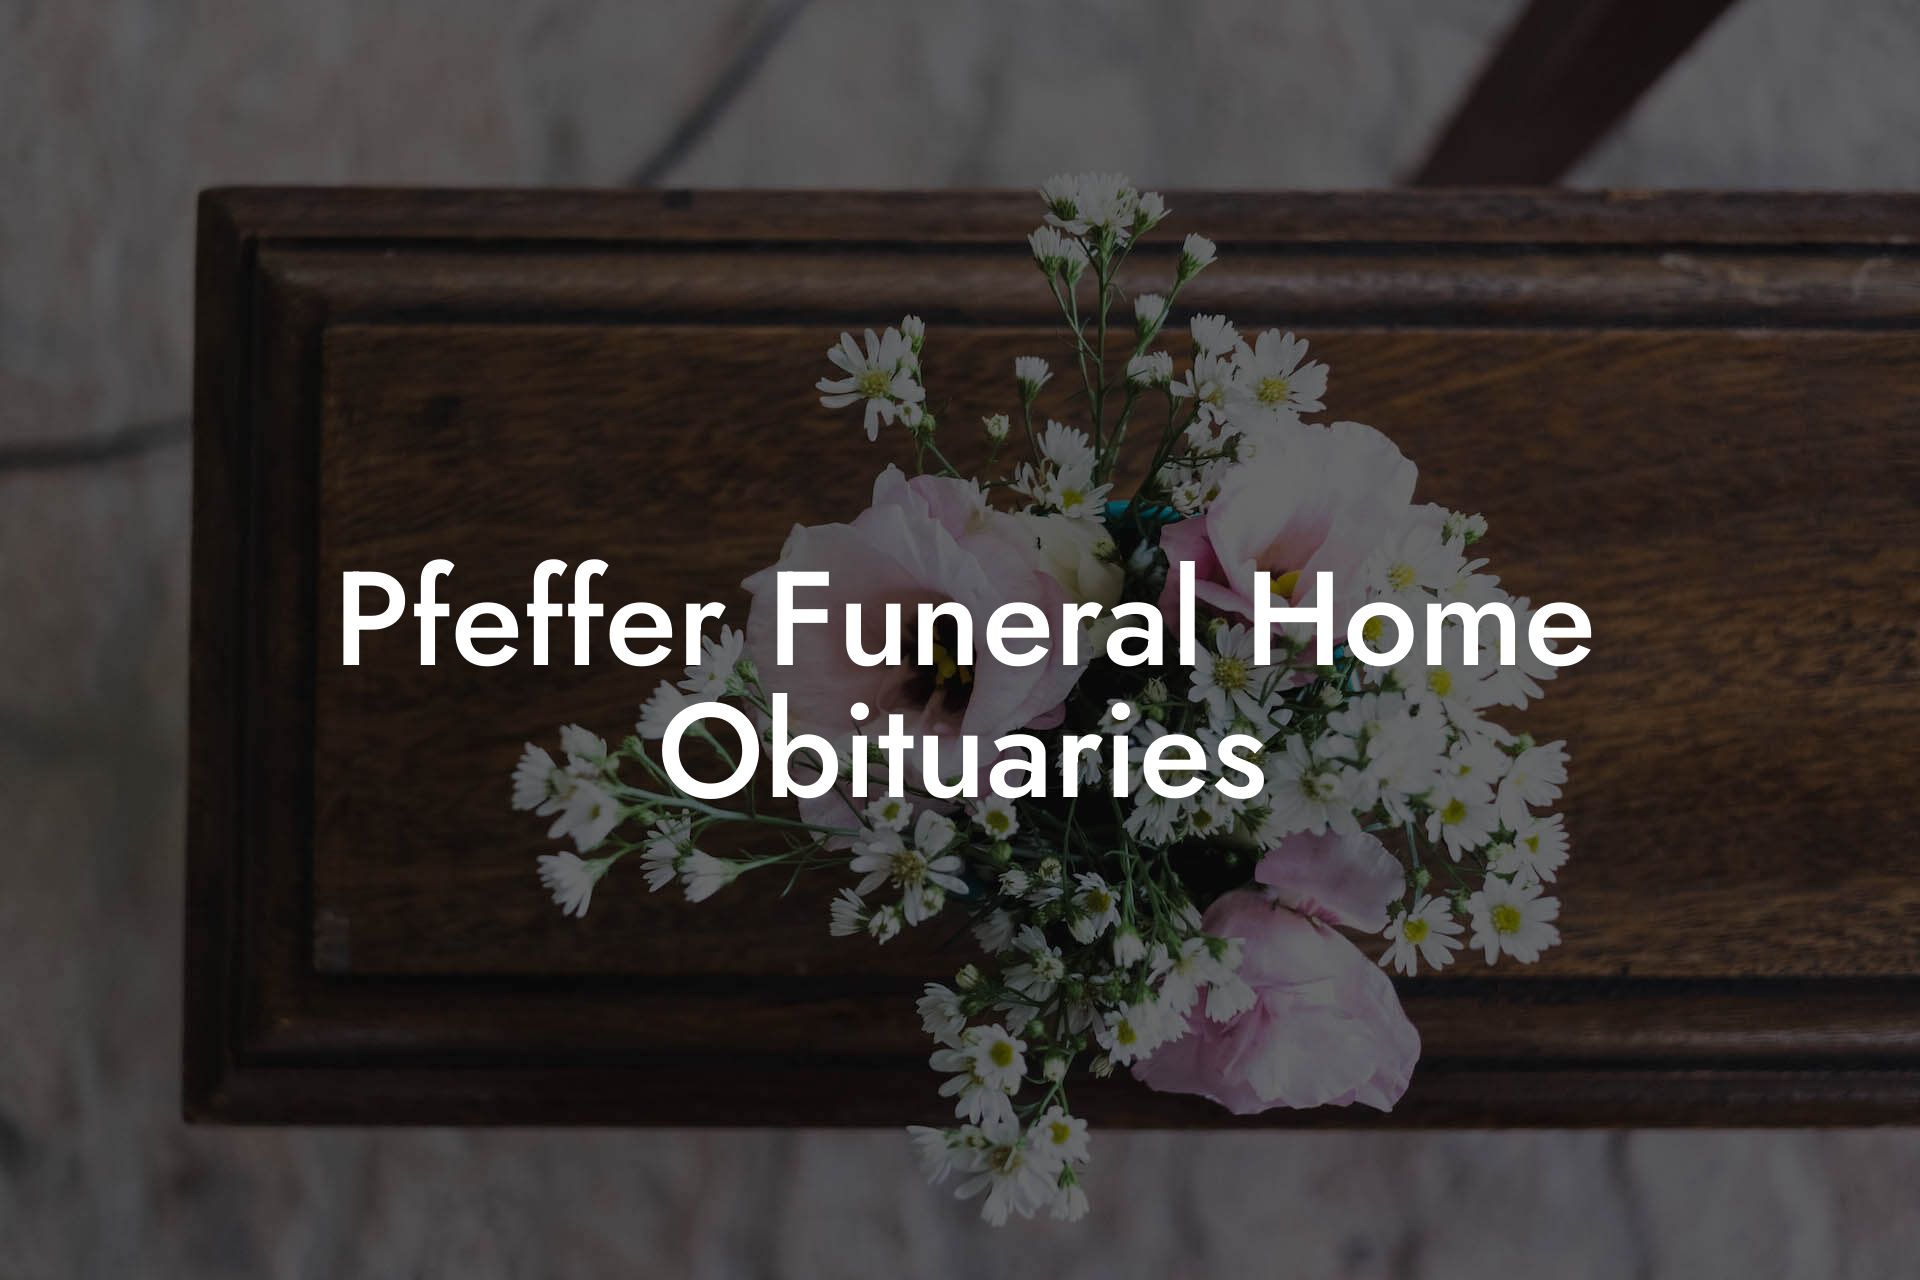 Pfeffer Funeral Home Obituaries